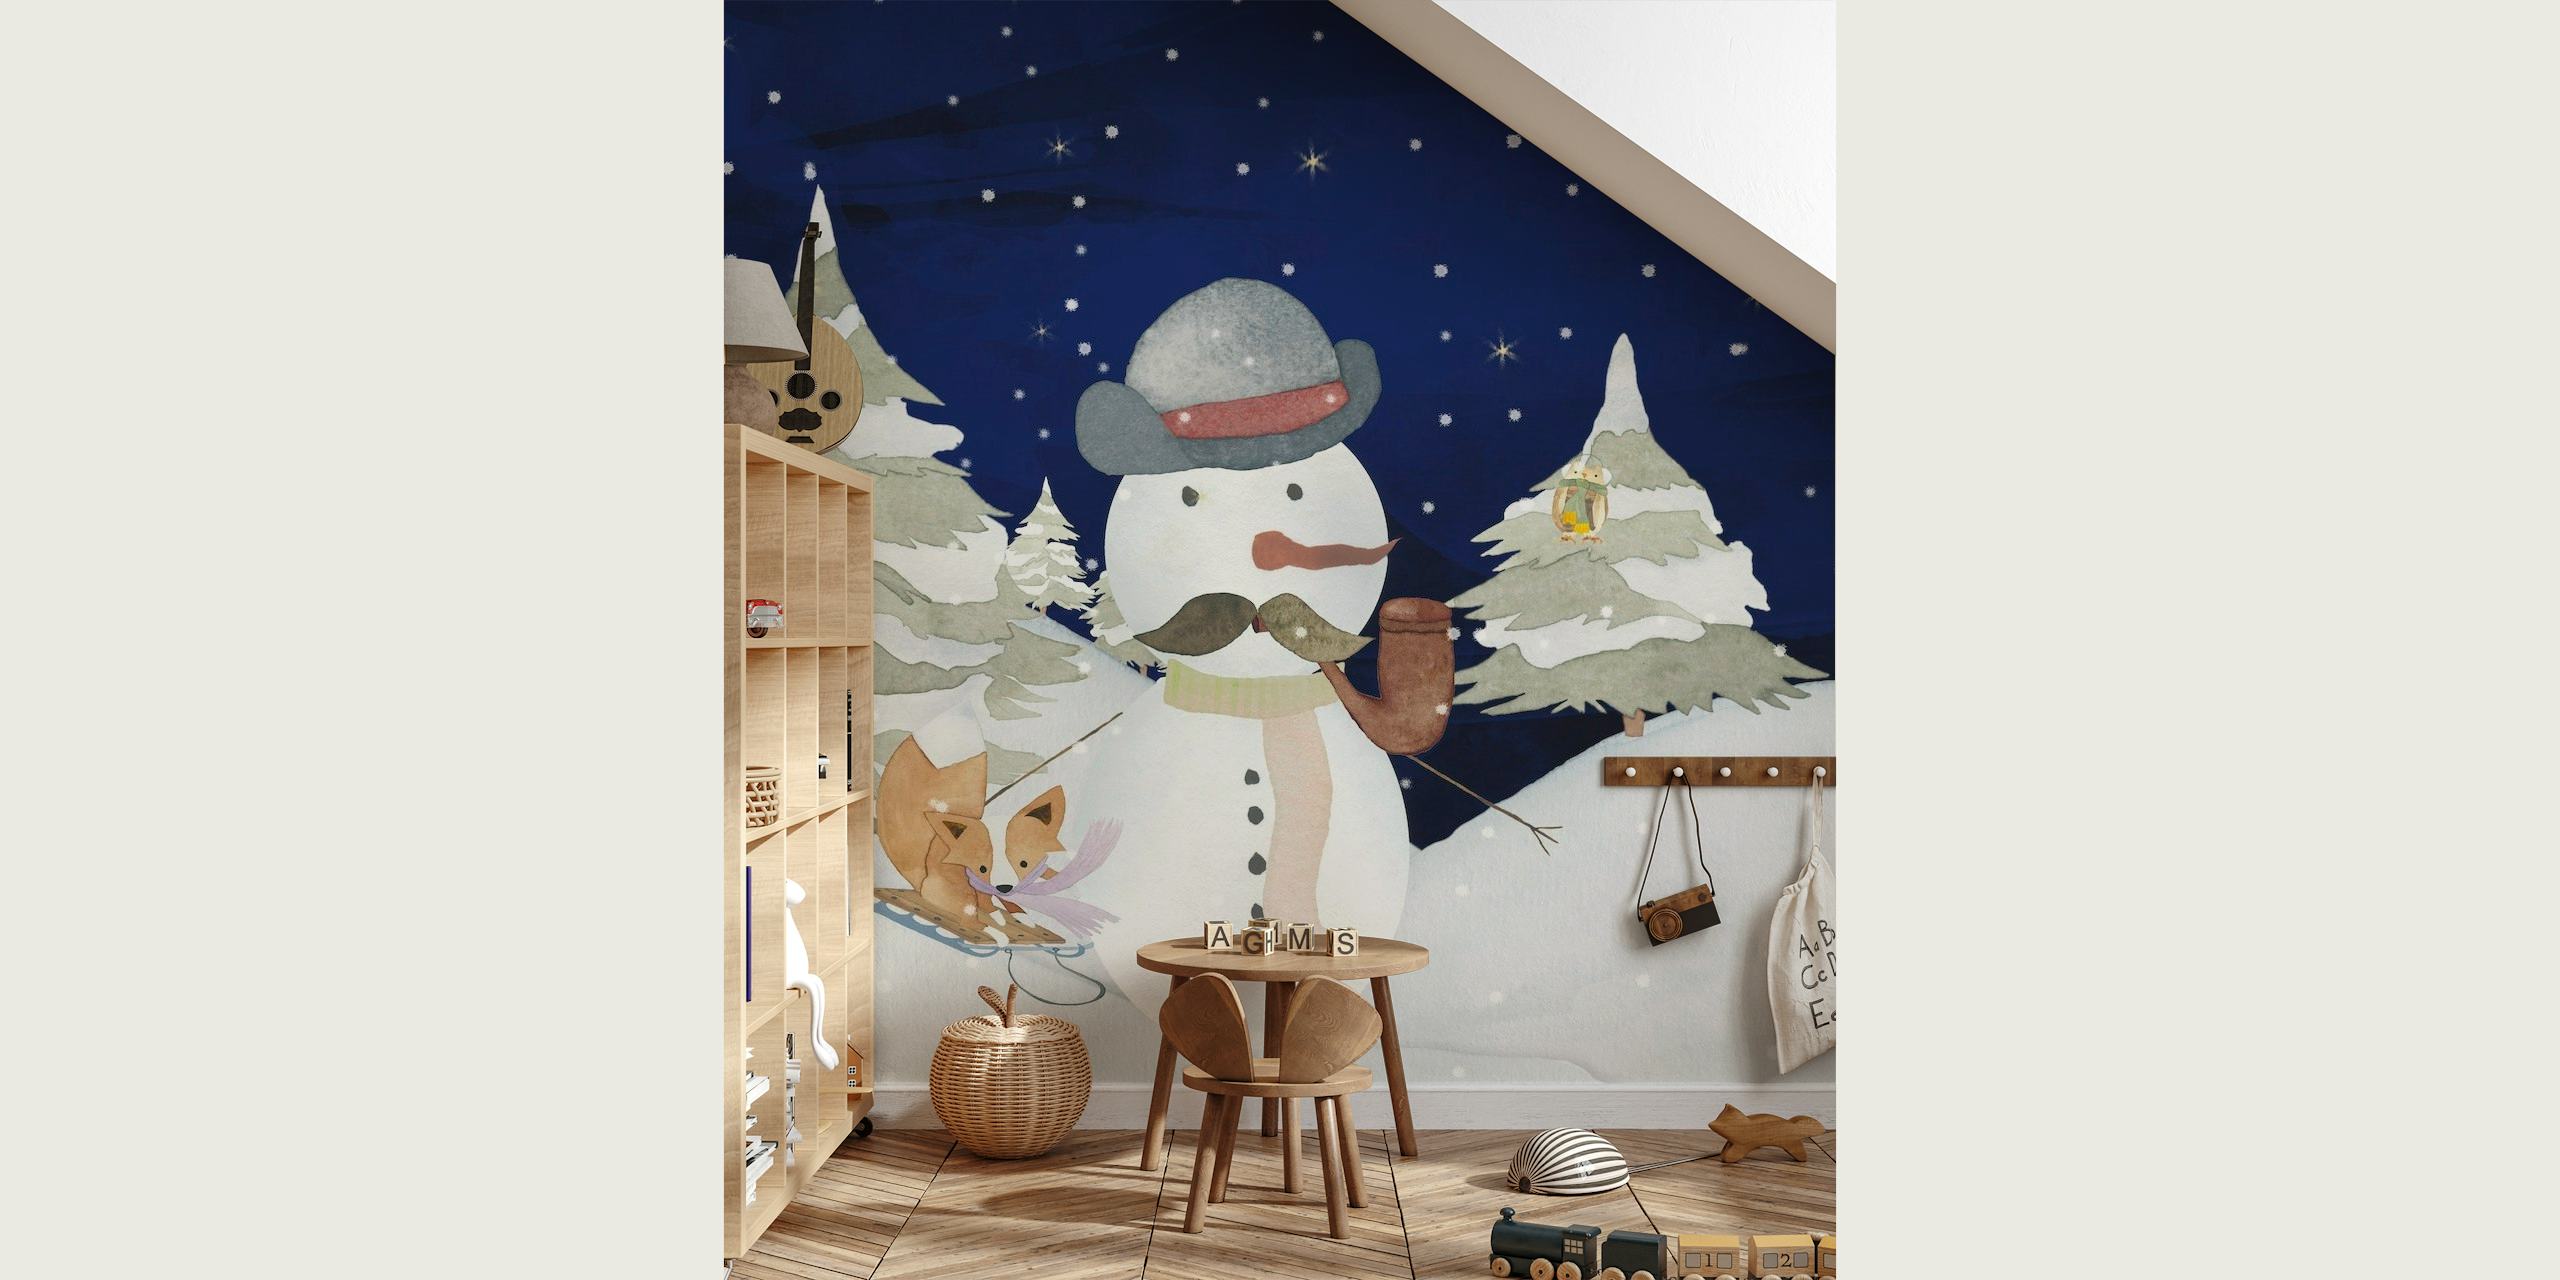 Snowman at night wallpaper